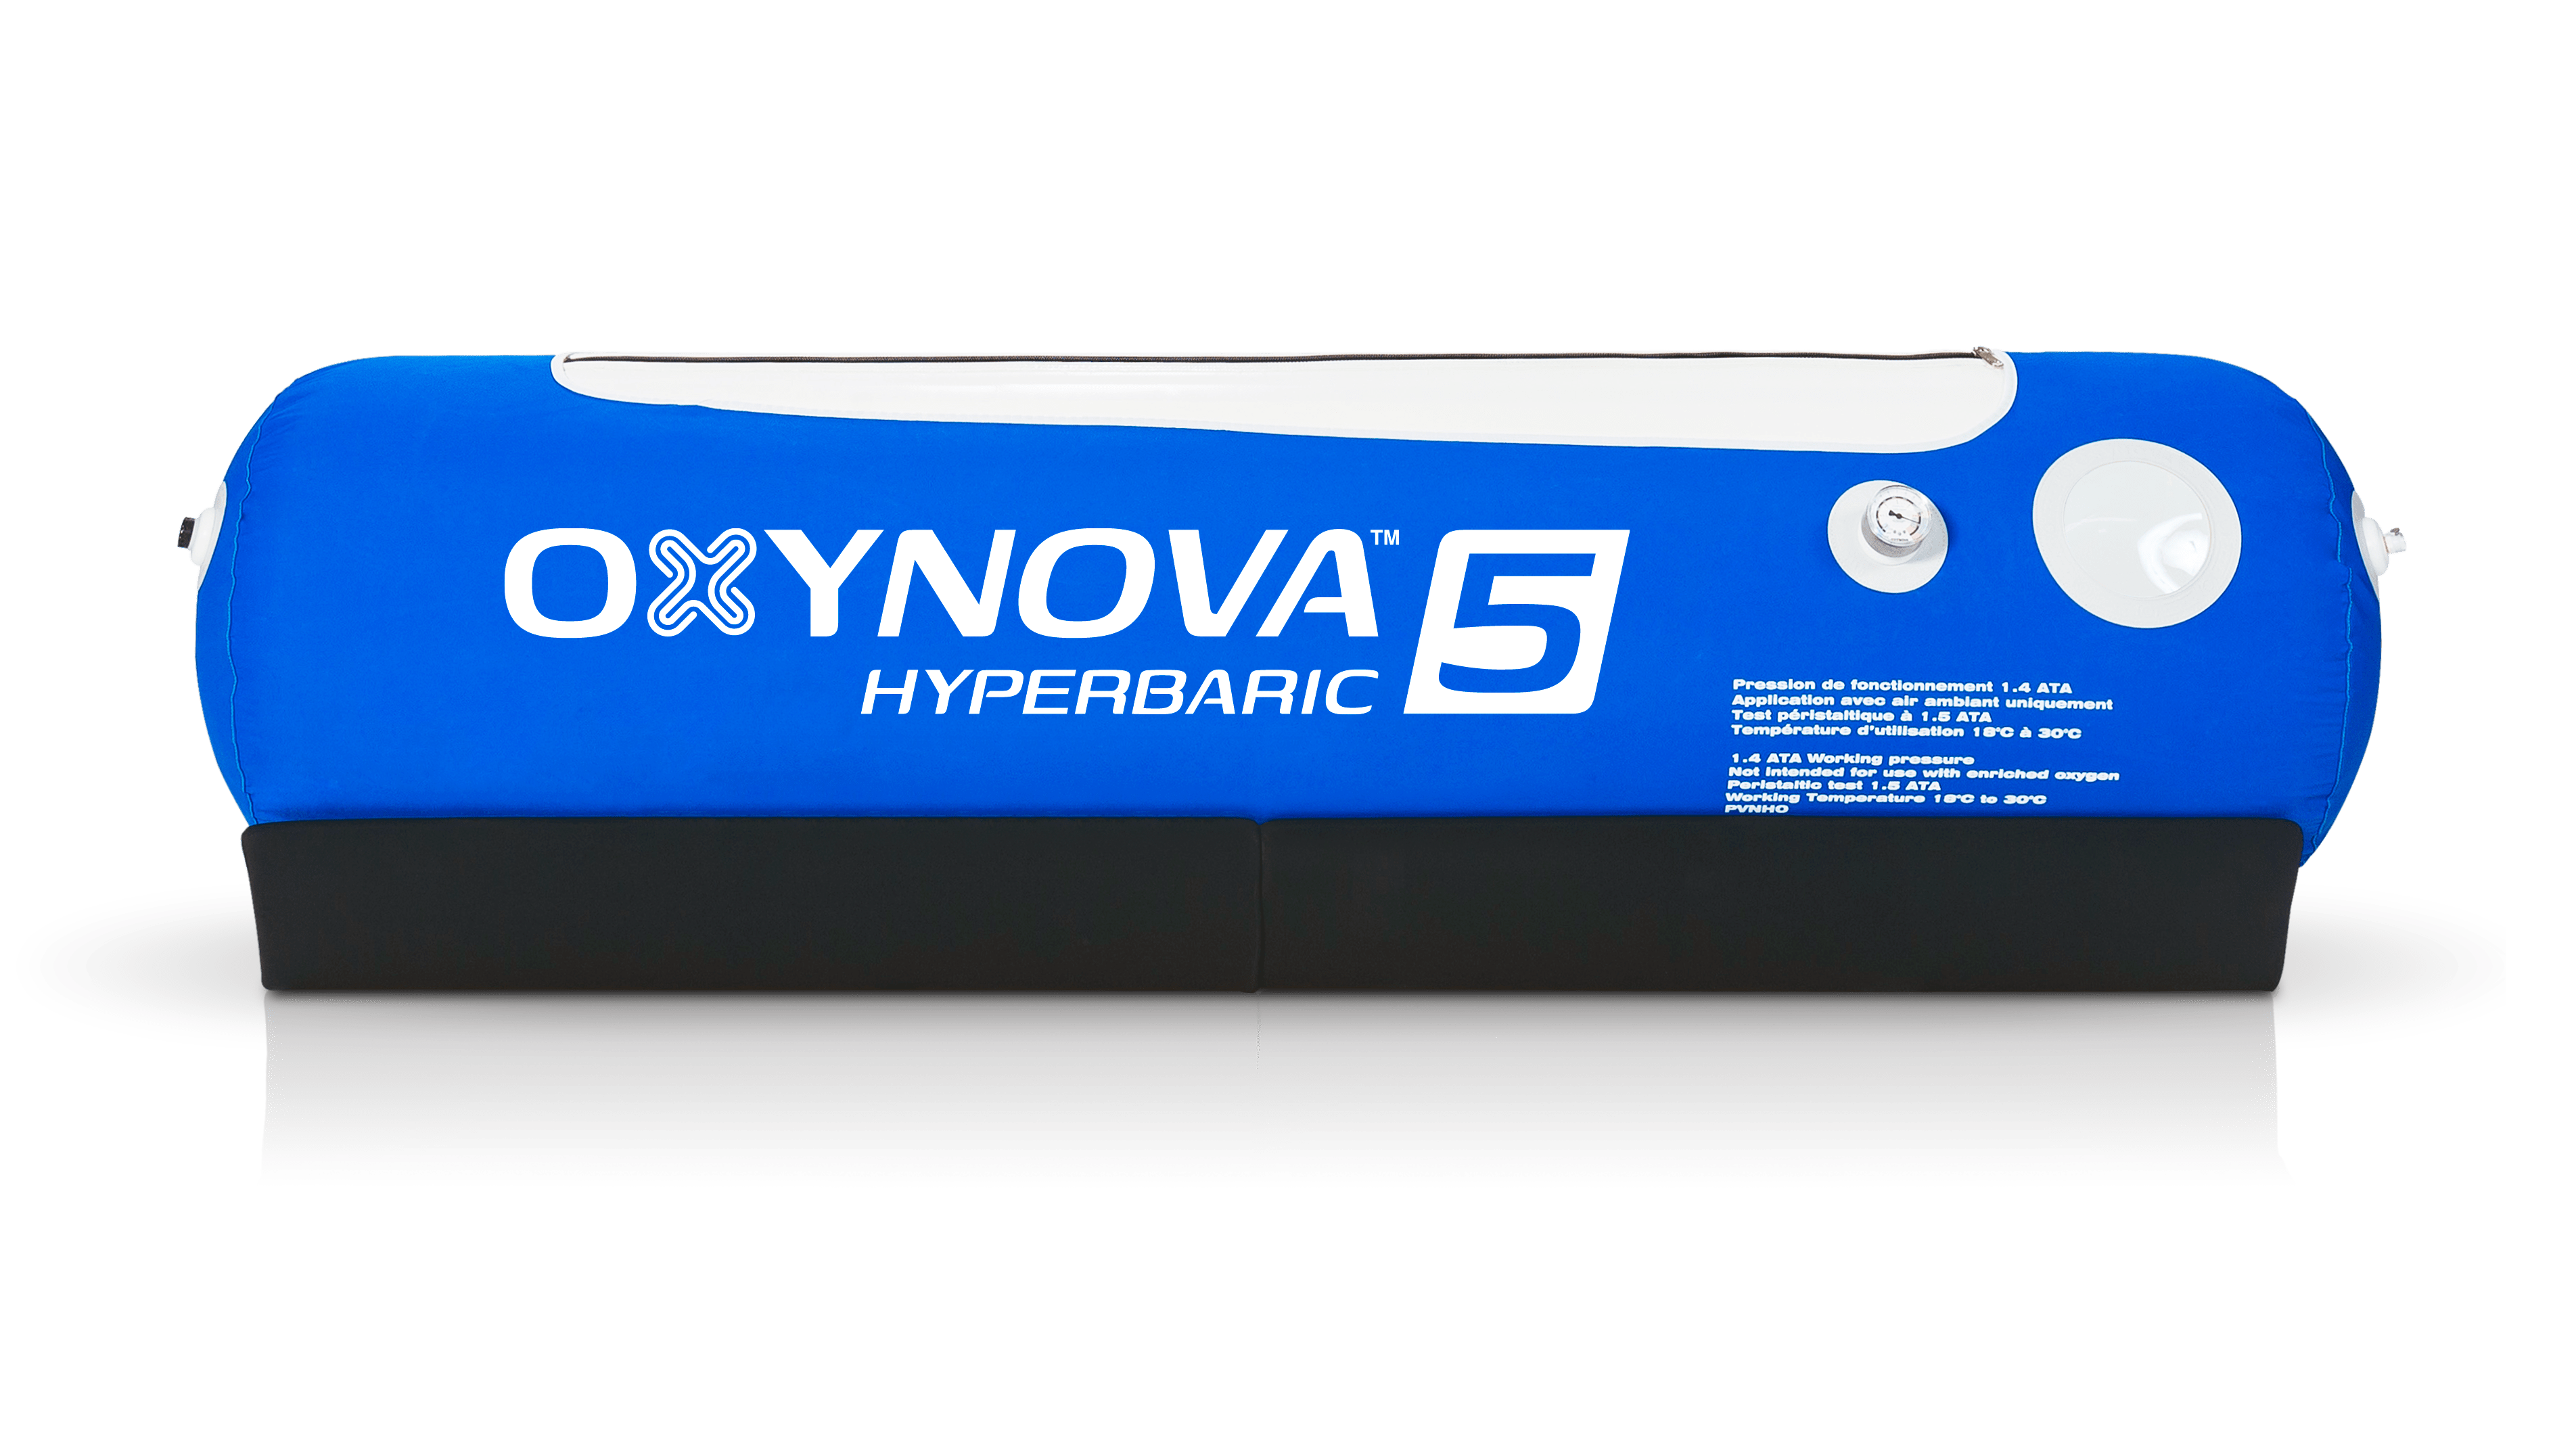 Oxynova Series 5 portable Hyperbaric Chambers